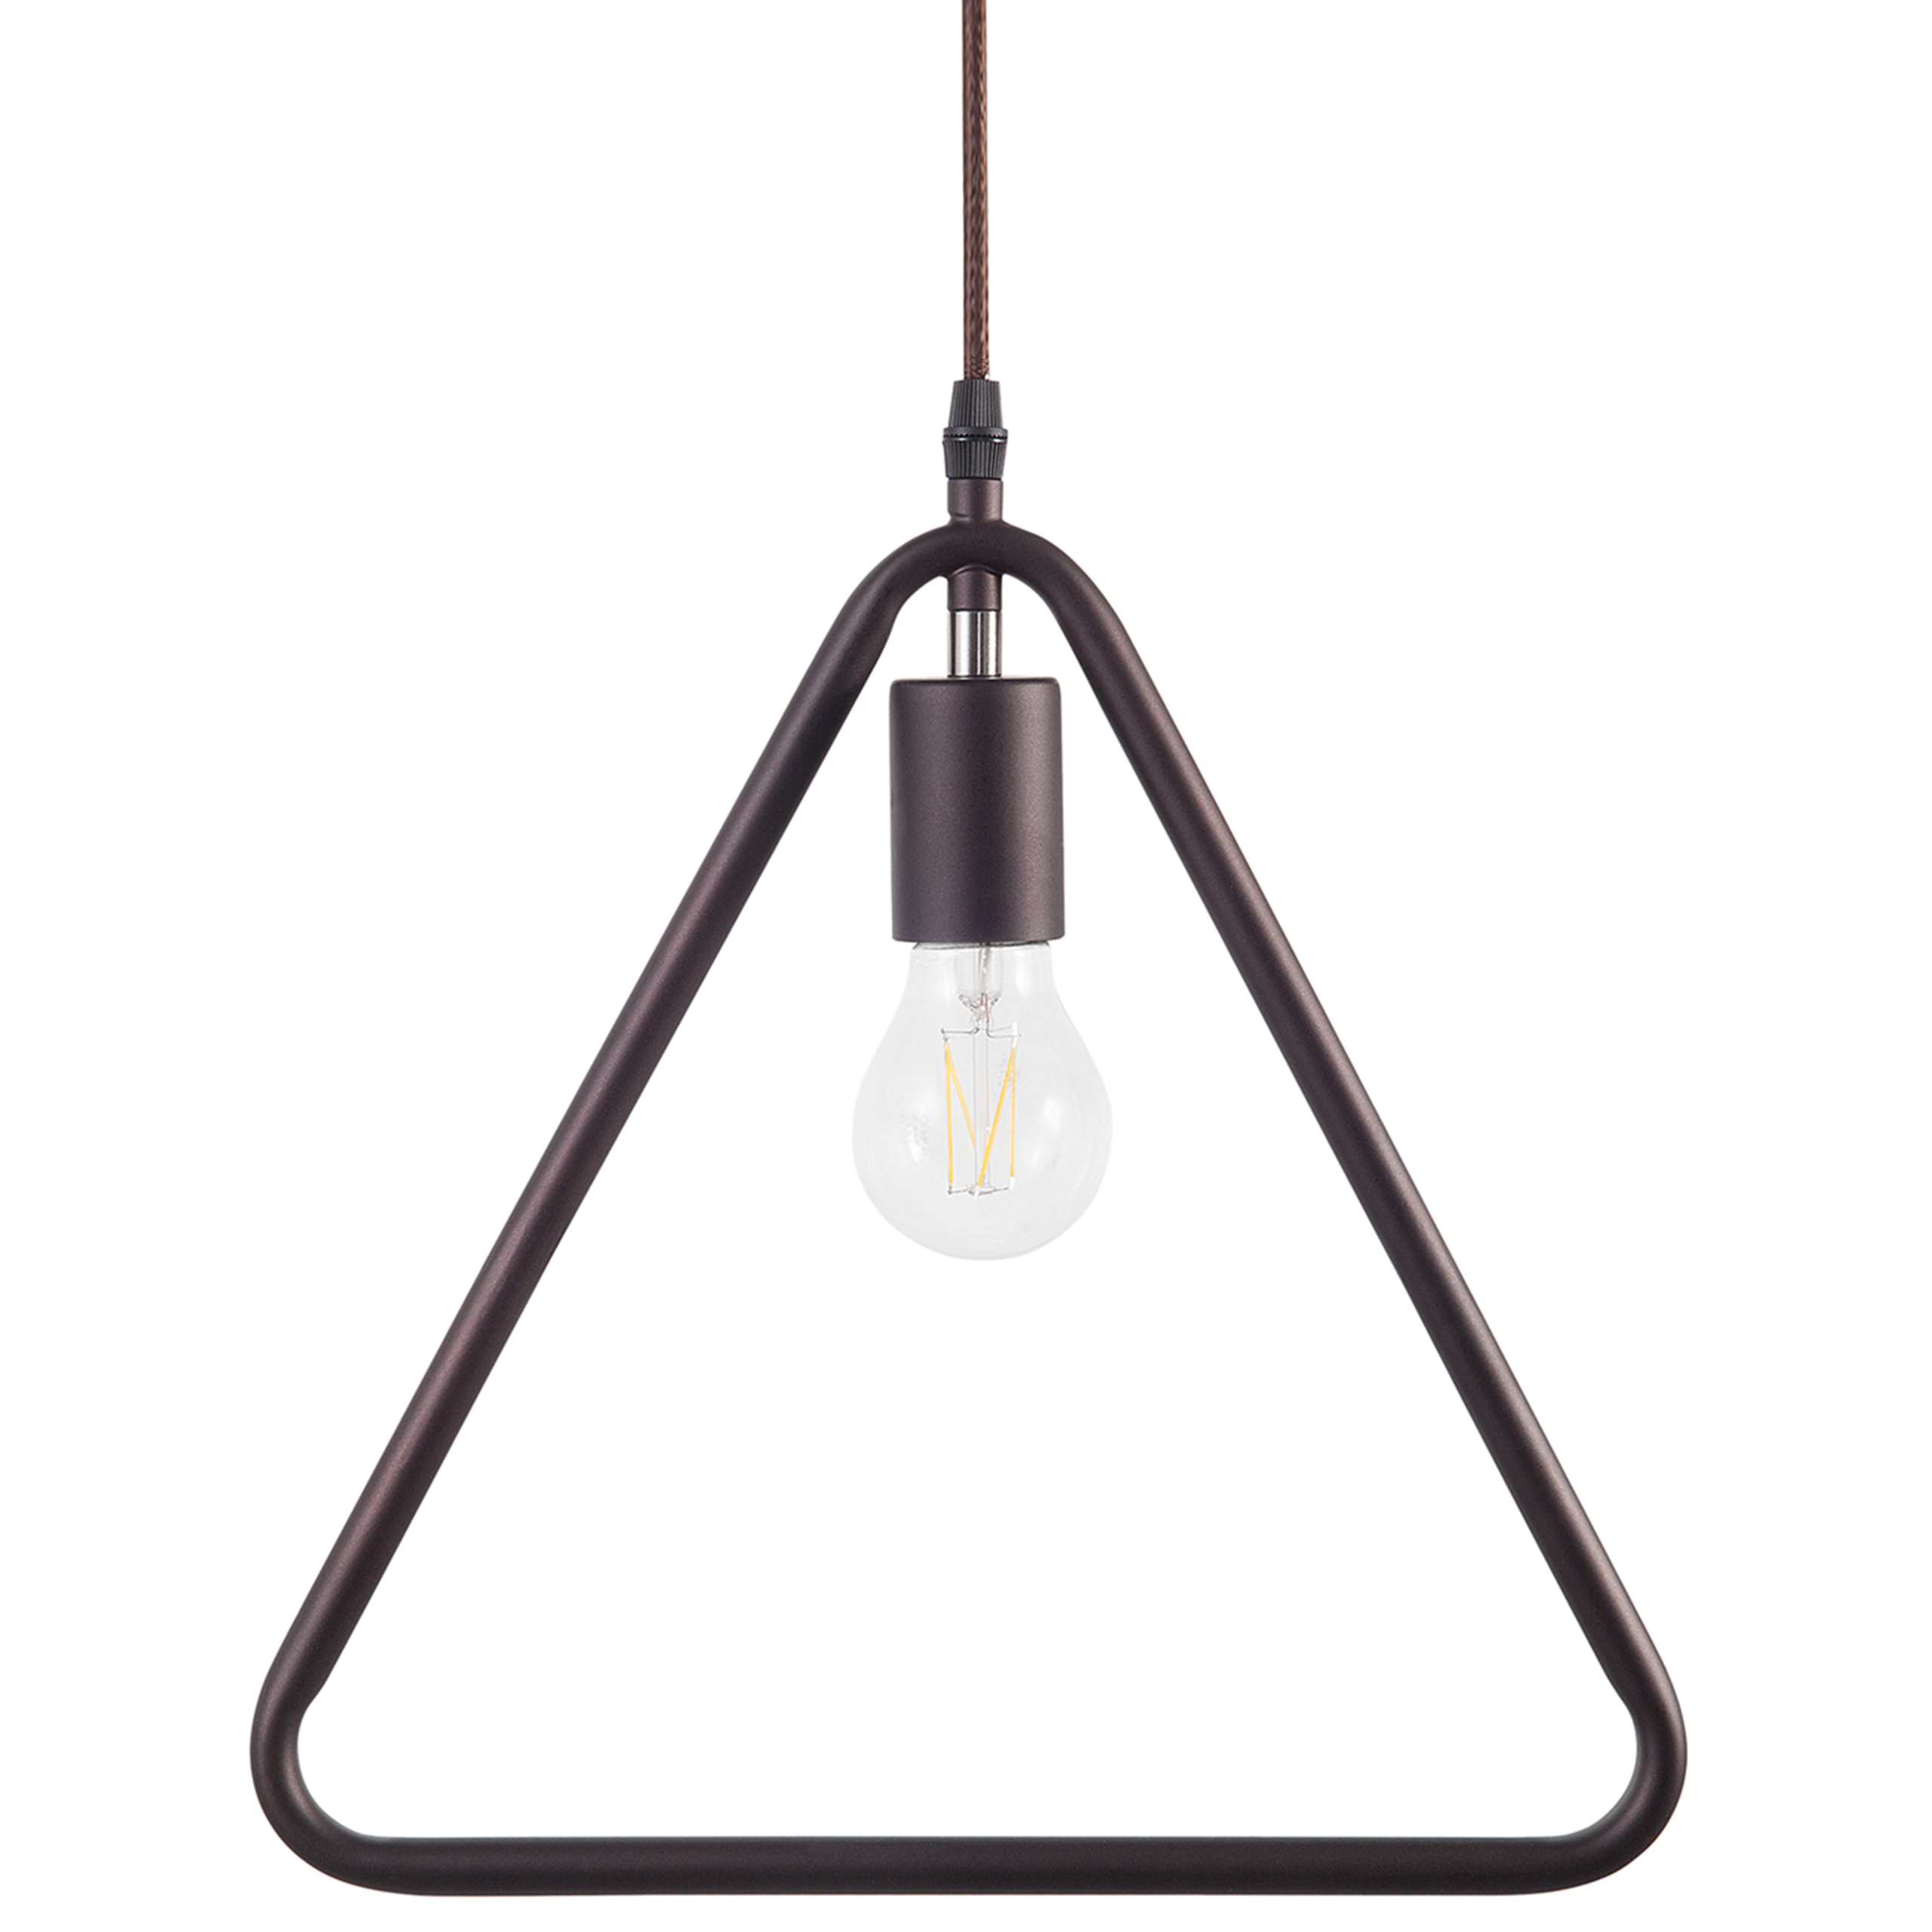 Beliani Ceiling Lamp Brown Metal 183 cm Triangle Shade Pendant Industrial